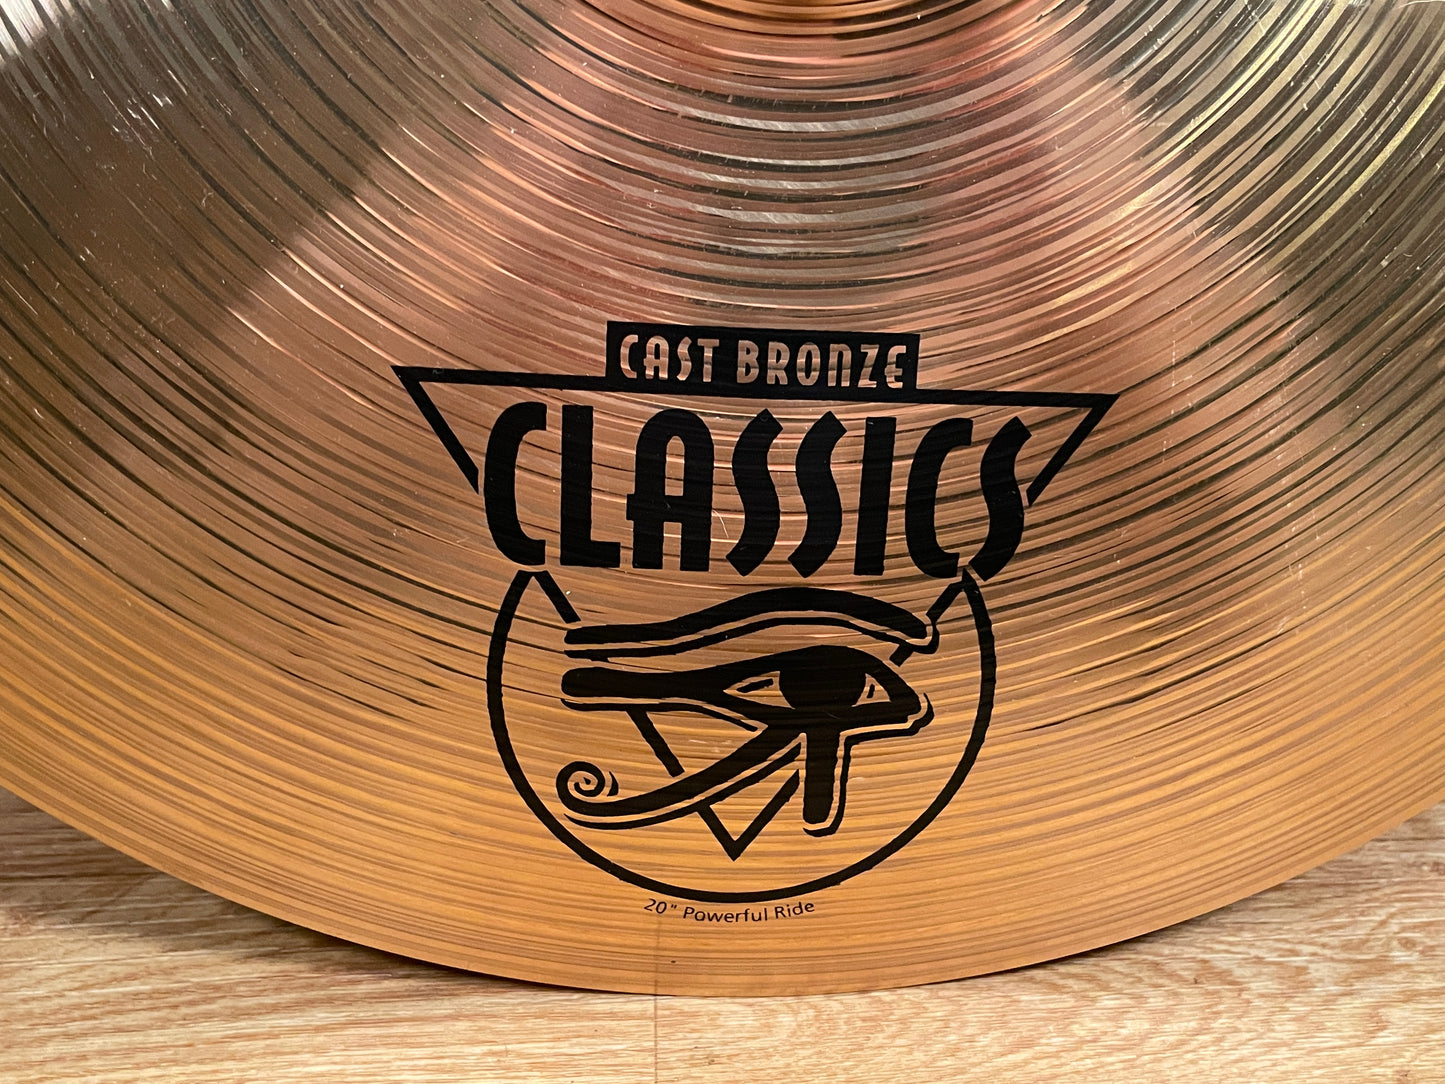 20" Meinl Classic Powerful Ride Cymbal 2434g *Video Demo*